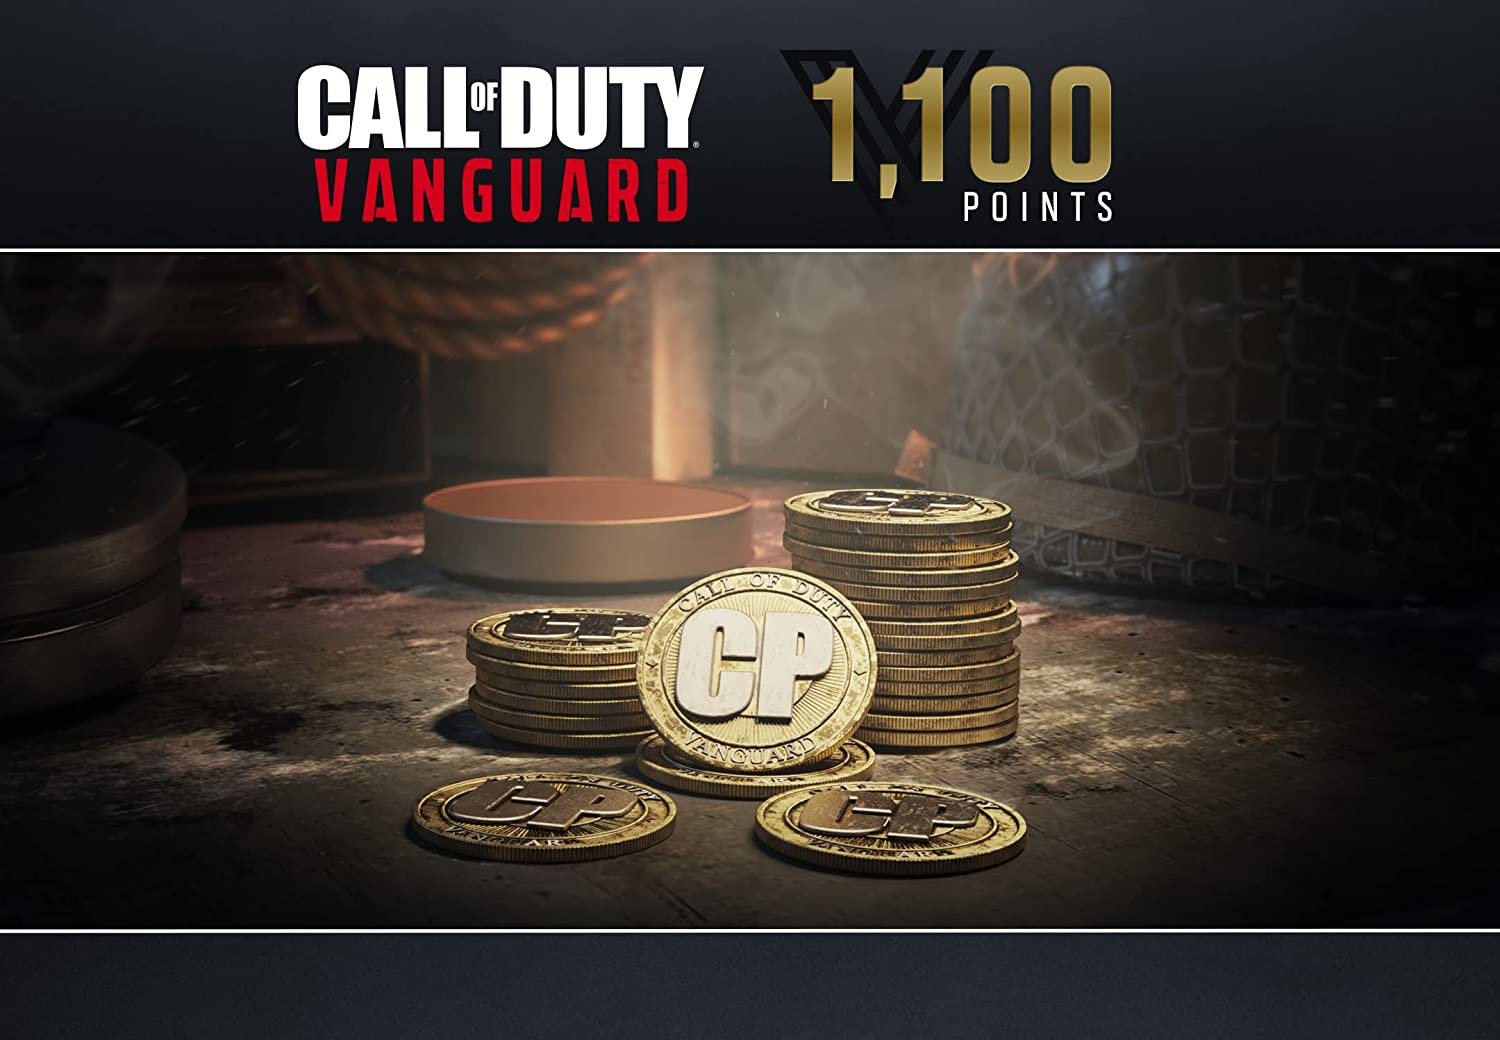 (11.37$) Call of Duty: Vanguard - 1100 Points XBOX One / Xbox Series X|S CD Key